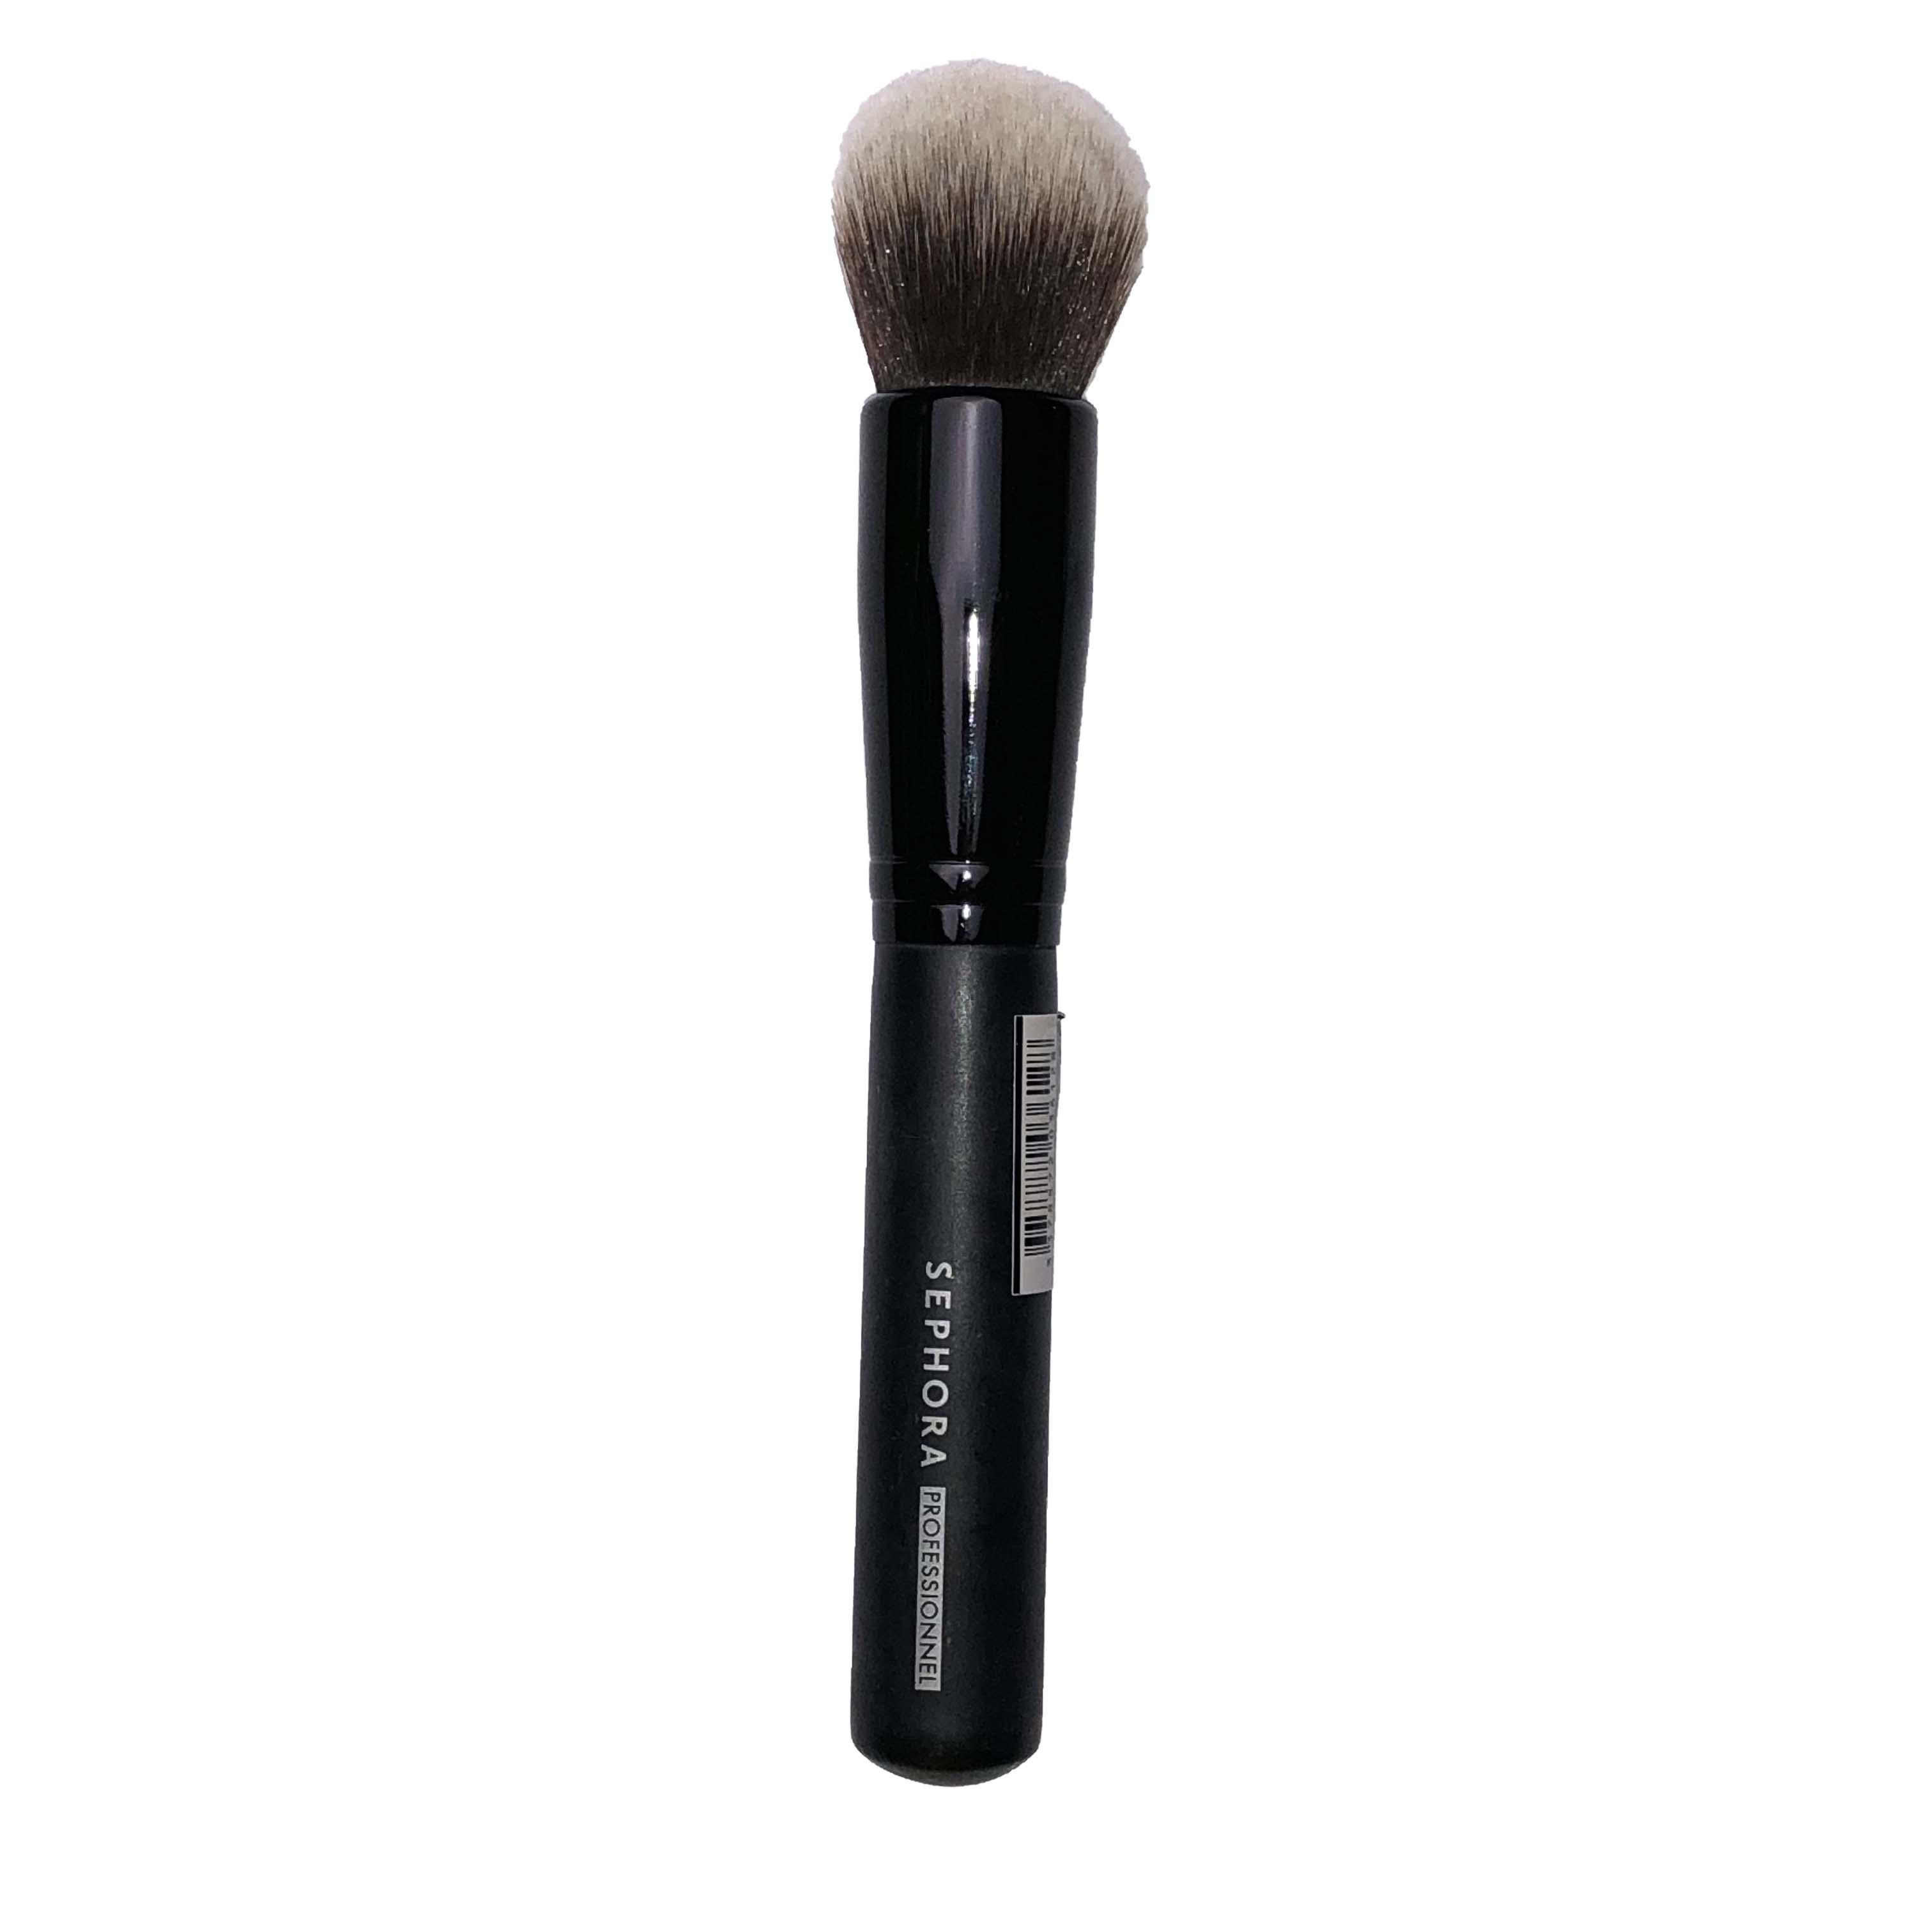 Sephora Professional Mineral Powder Face Brush 45